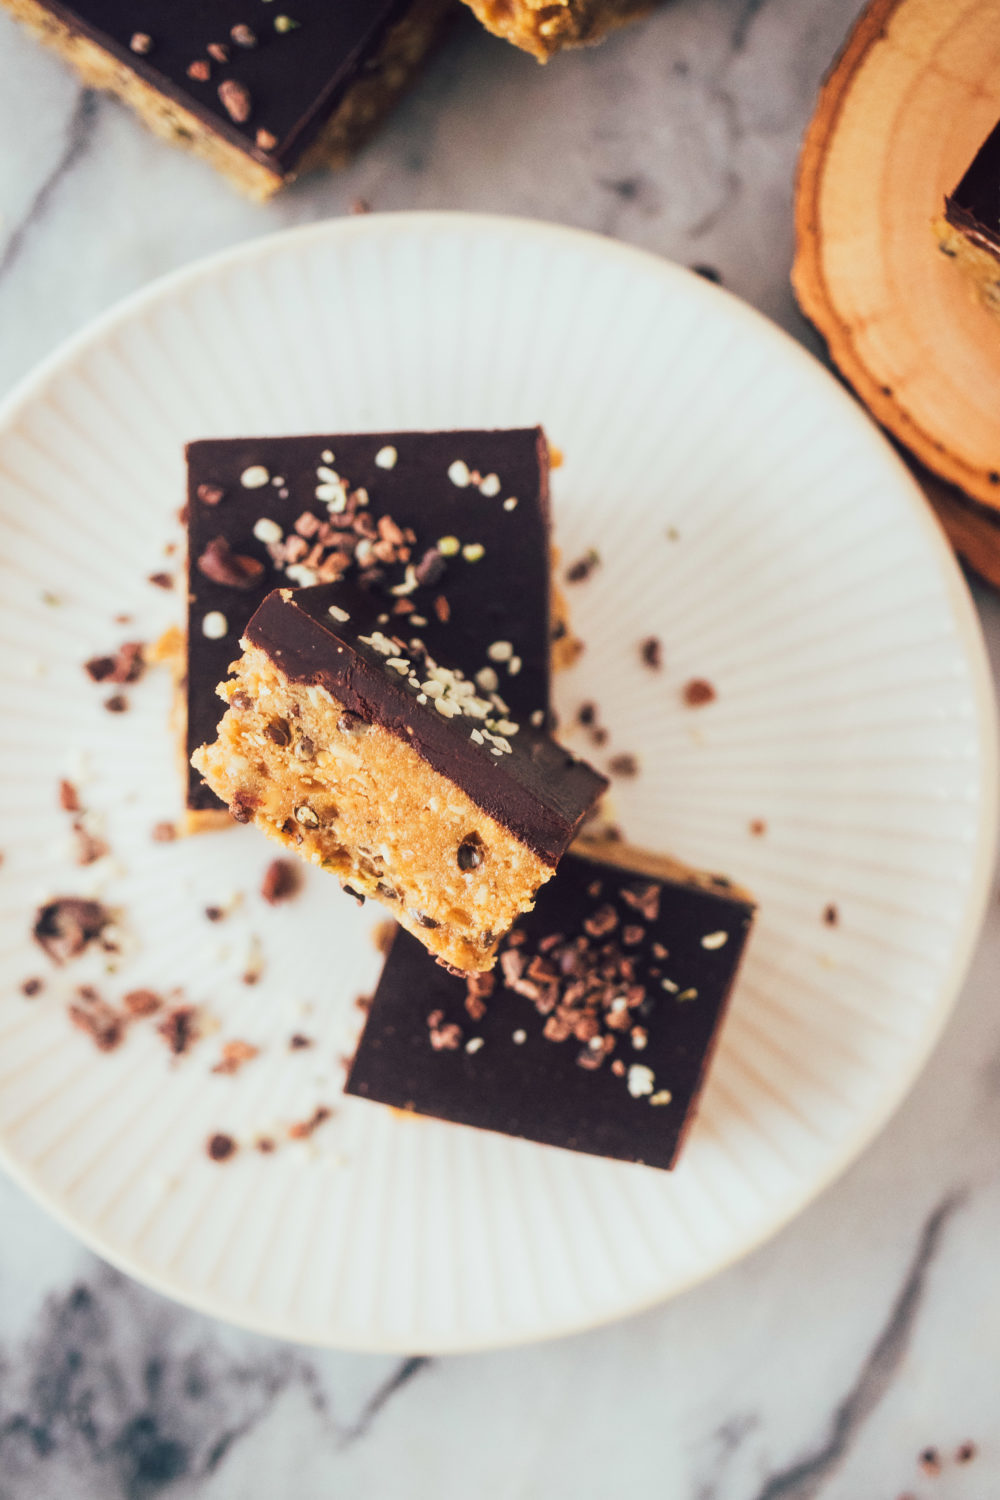 Chocolate Nut Butter Bars, a great paleo, healthy, gluten-free, dairy-free dessert recipe.